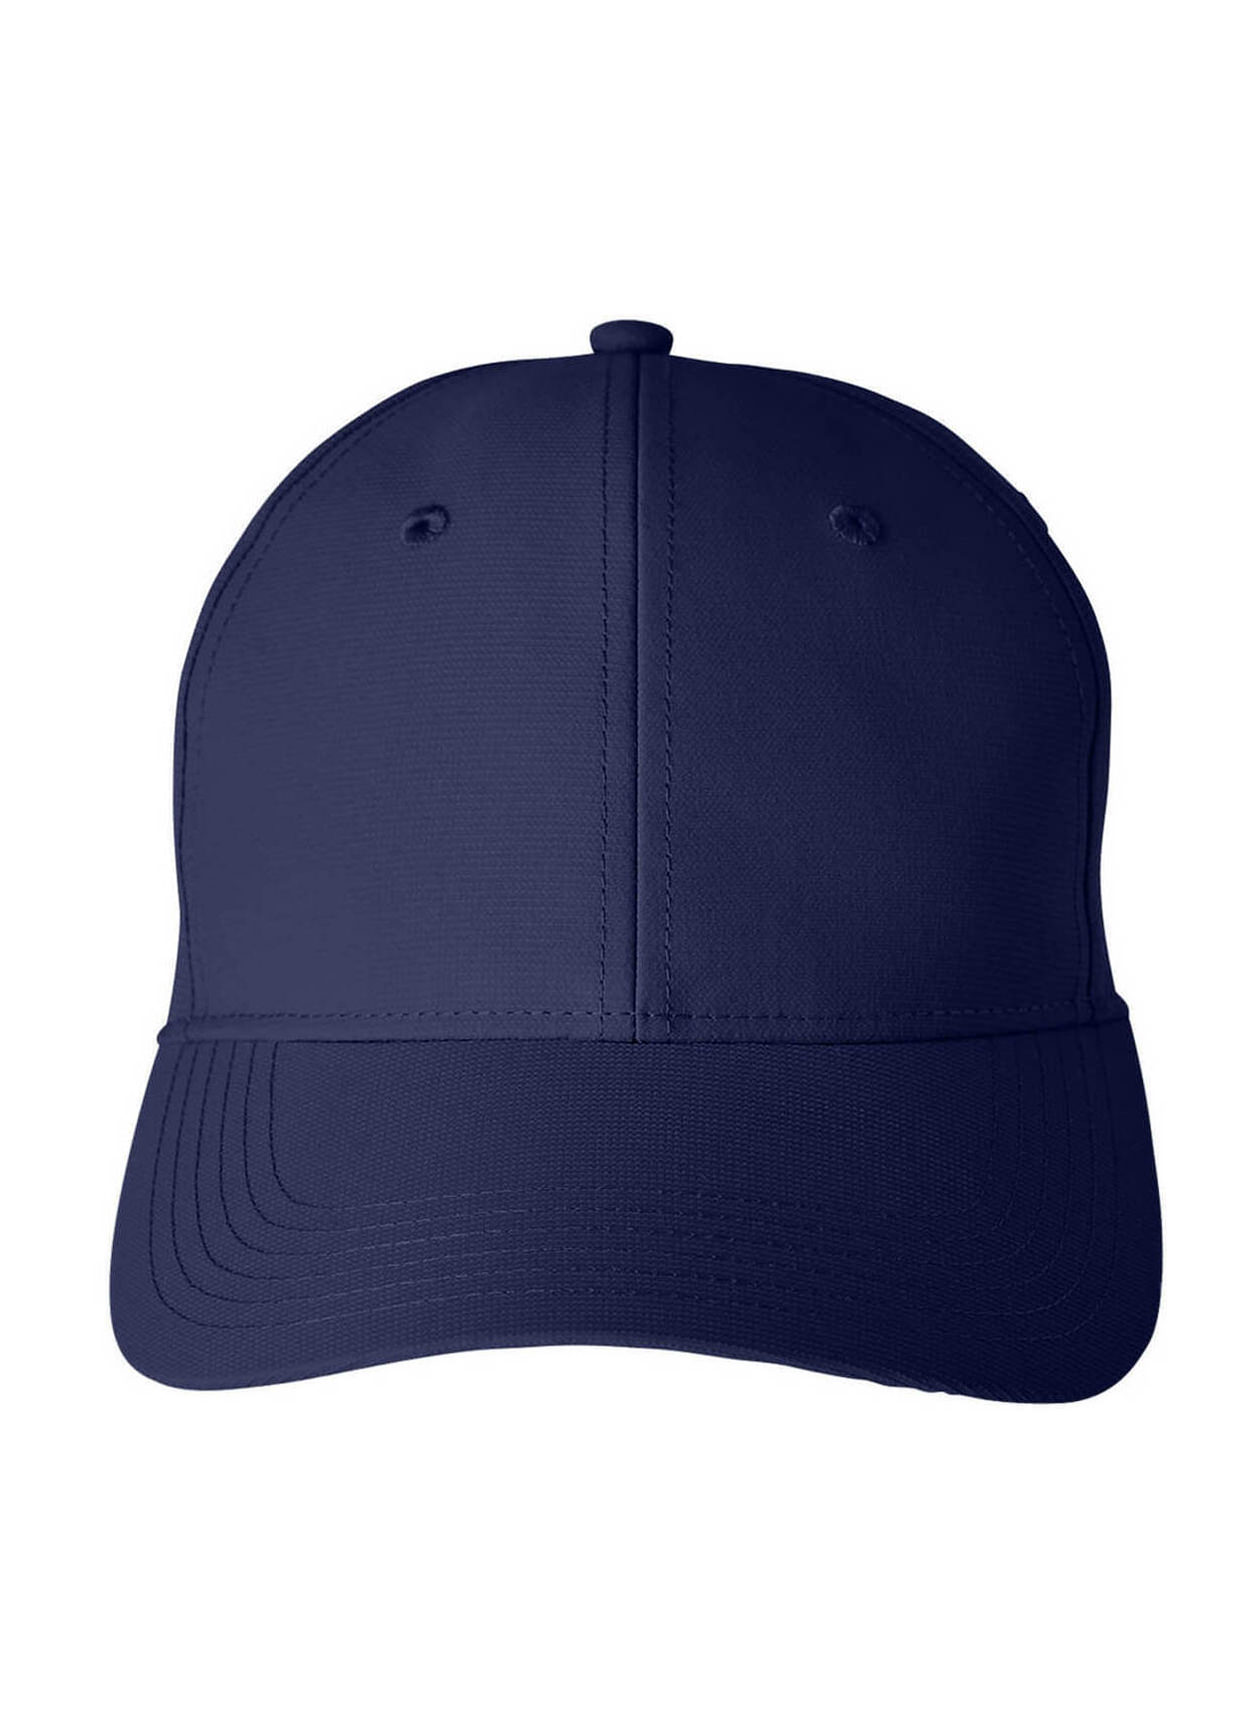 PUMA Peacoat Pounce Adjustable Hat